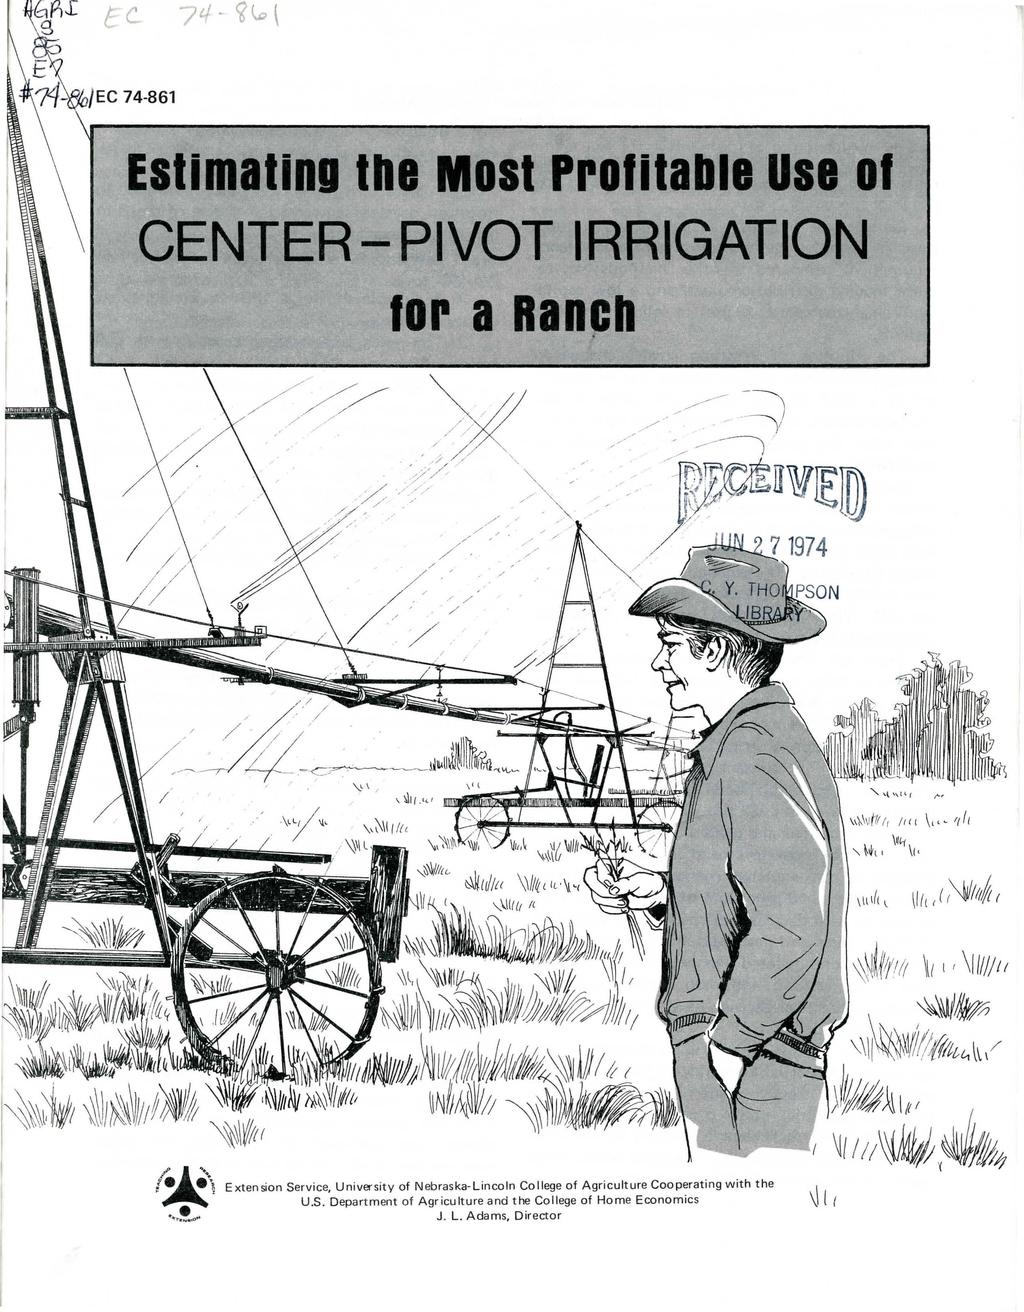 Estimating the Most Profitable usa ol CENTER-PIVOT IRRIGATION lor a Ranch.